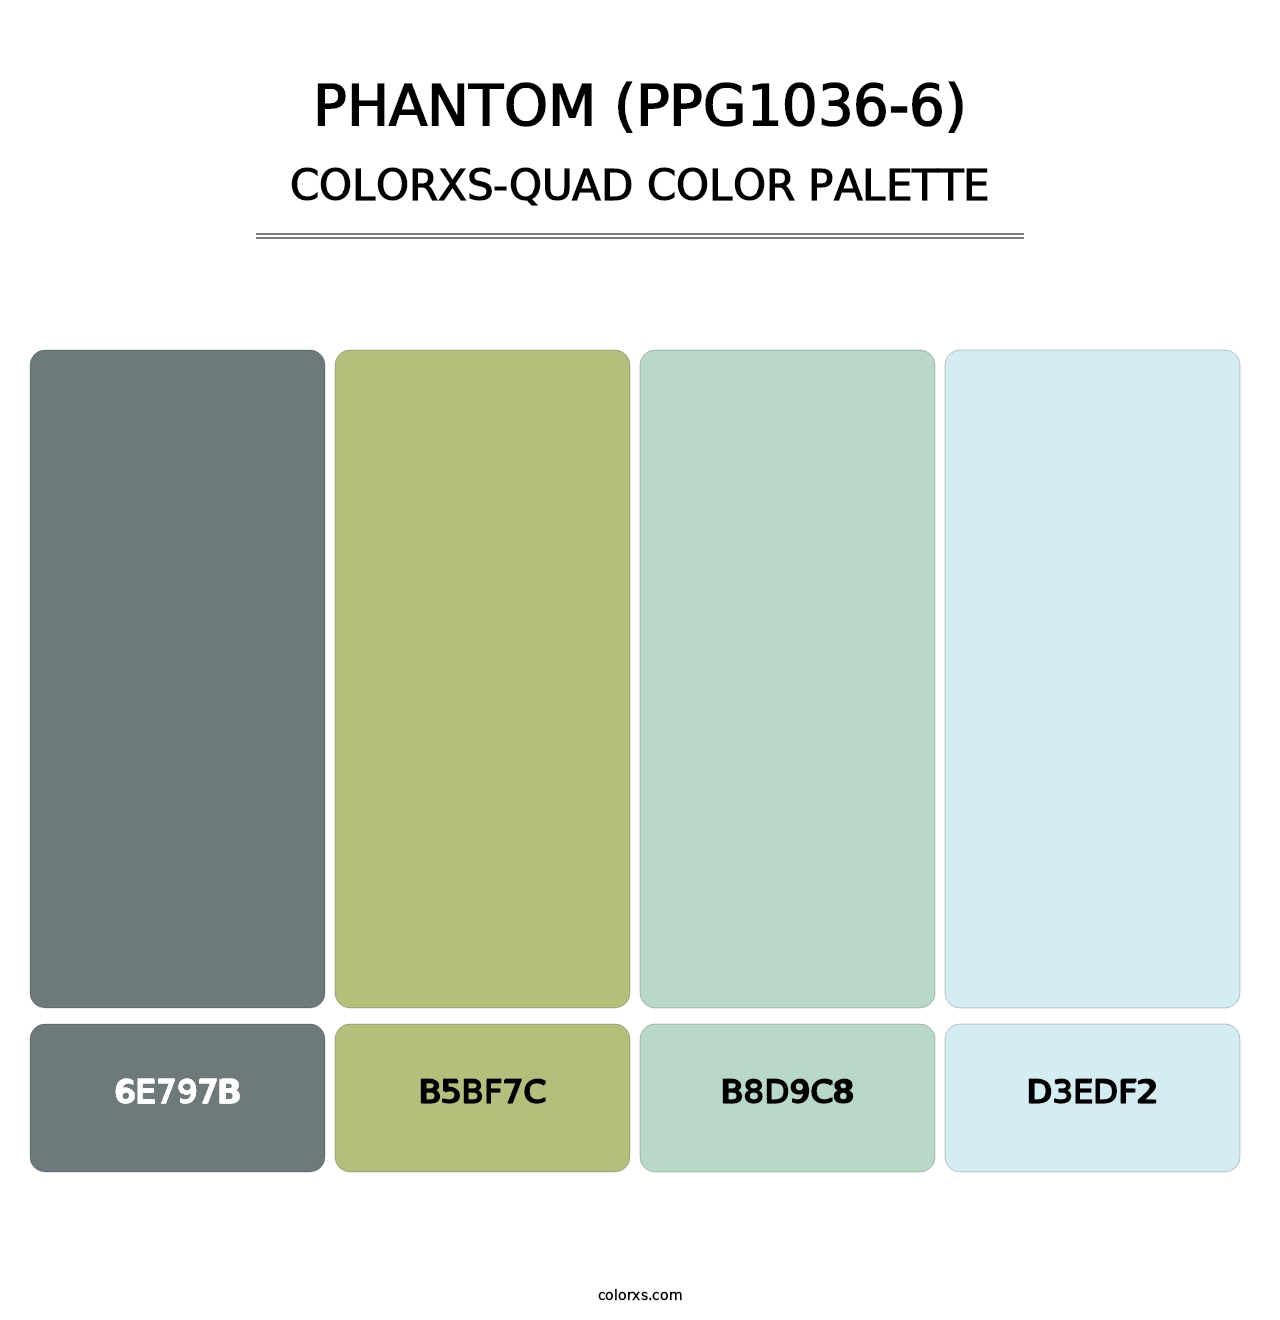 Phantom (PPG1036-6) - Colorxs Quad Palette